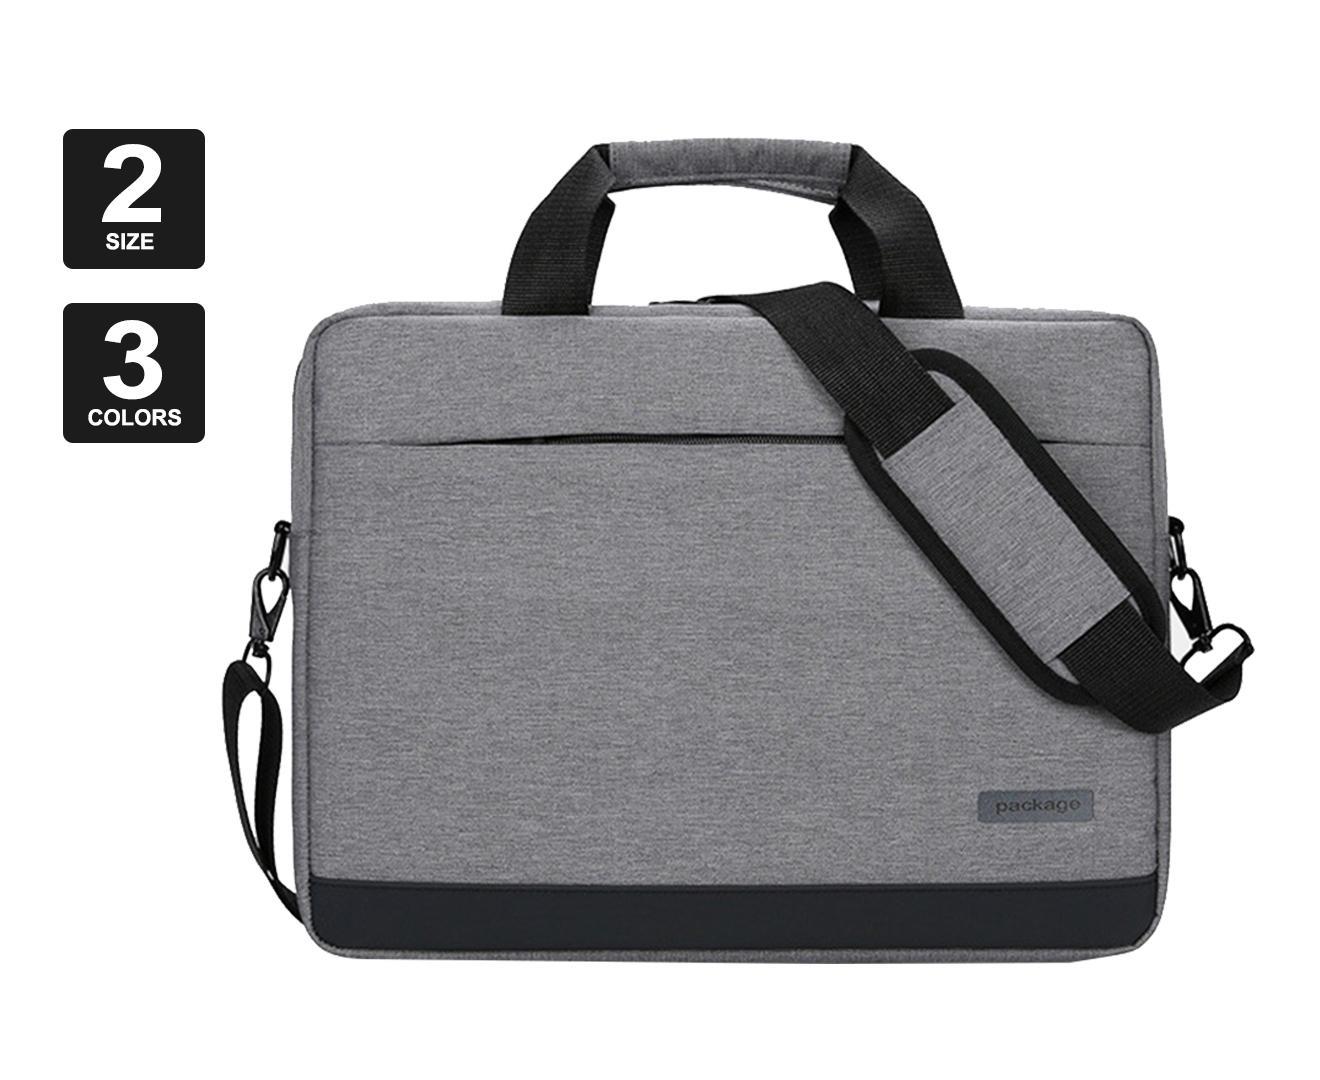 Vivva Laptop Sleeve briefcase Carry Bag for Macbook Dell Sony HP Lenovo 15.6 inch - Grey